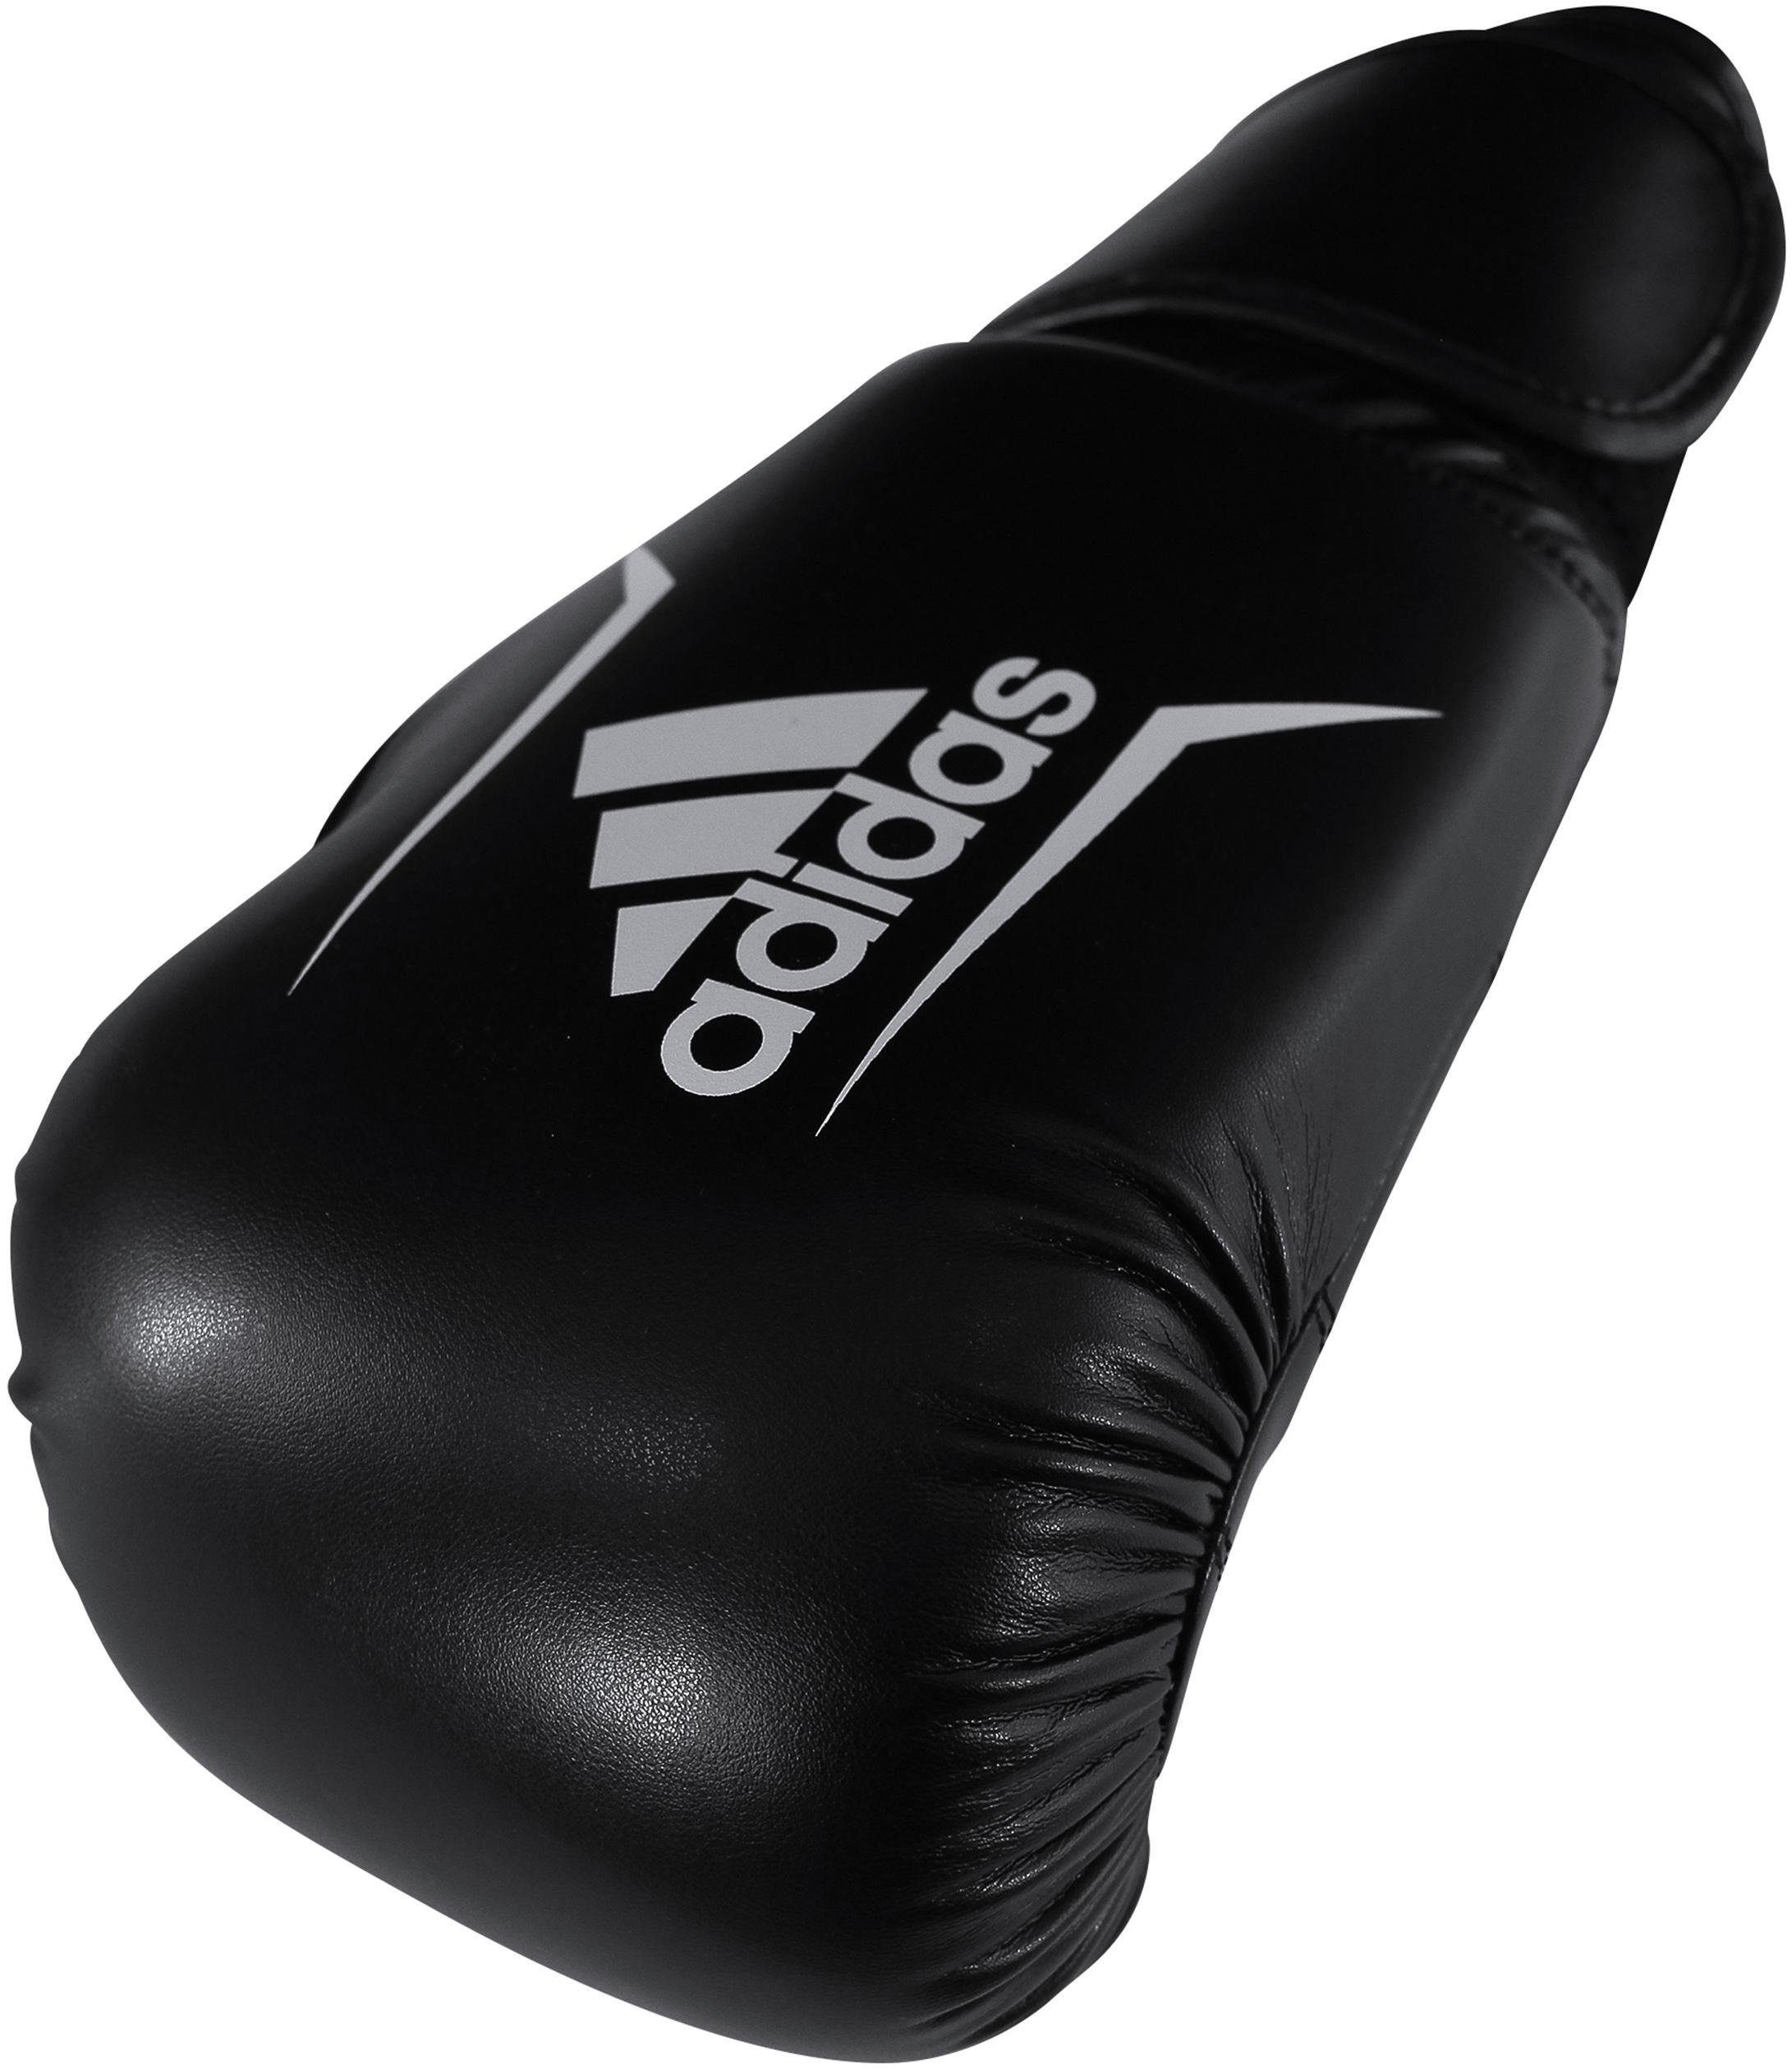 mit Set Performance adidas Boxing Bandagen, Boxhandschuhen) (Set, Performance Boxsack mit